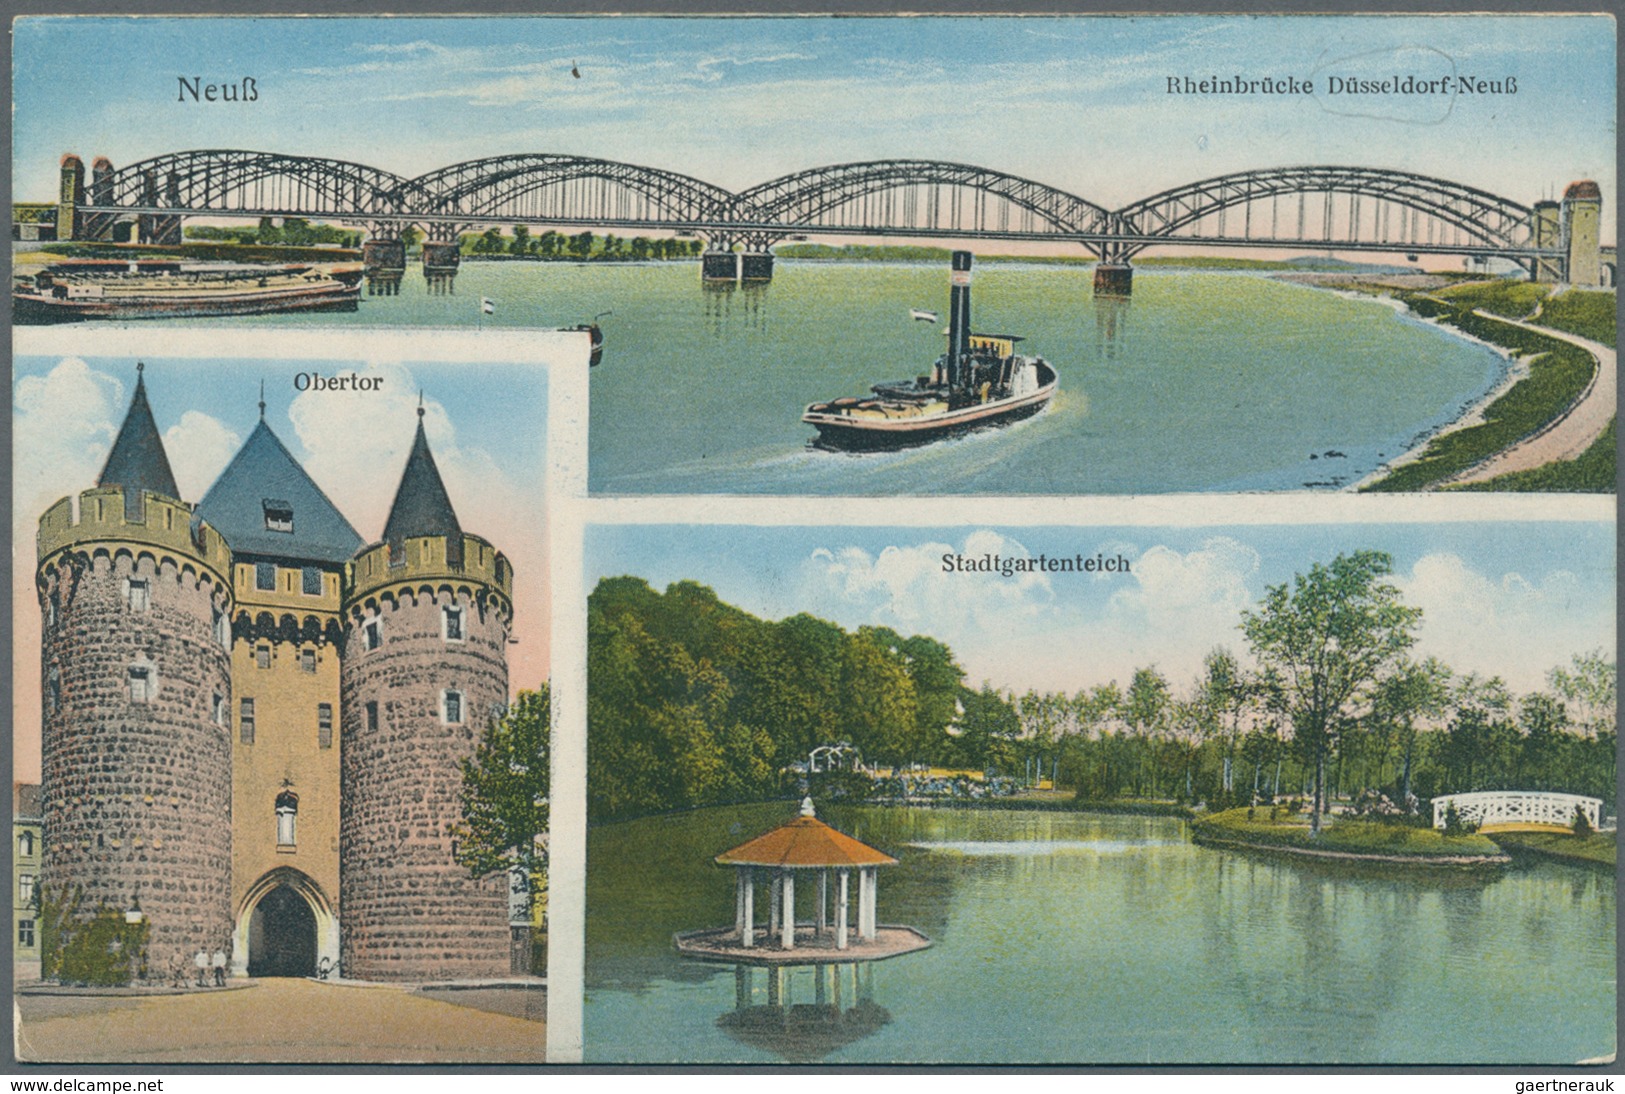 Ansichtskarten: Nordrhein-Westfalen: MEERBUSCH, HILDEN, LANGENFELD, METTMANN, RATINGEN, NEUSS, ZONS